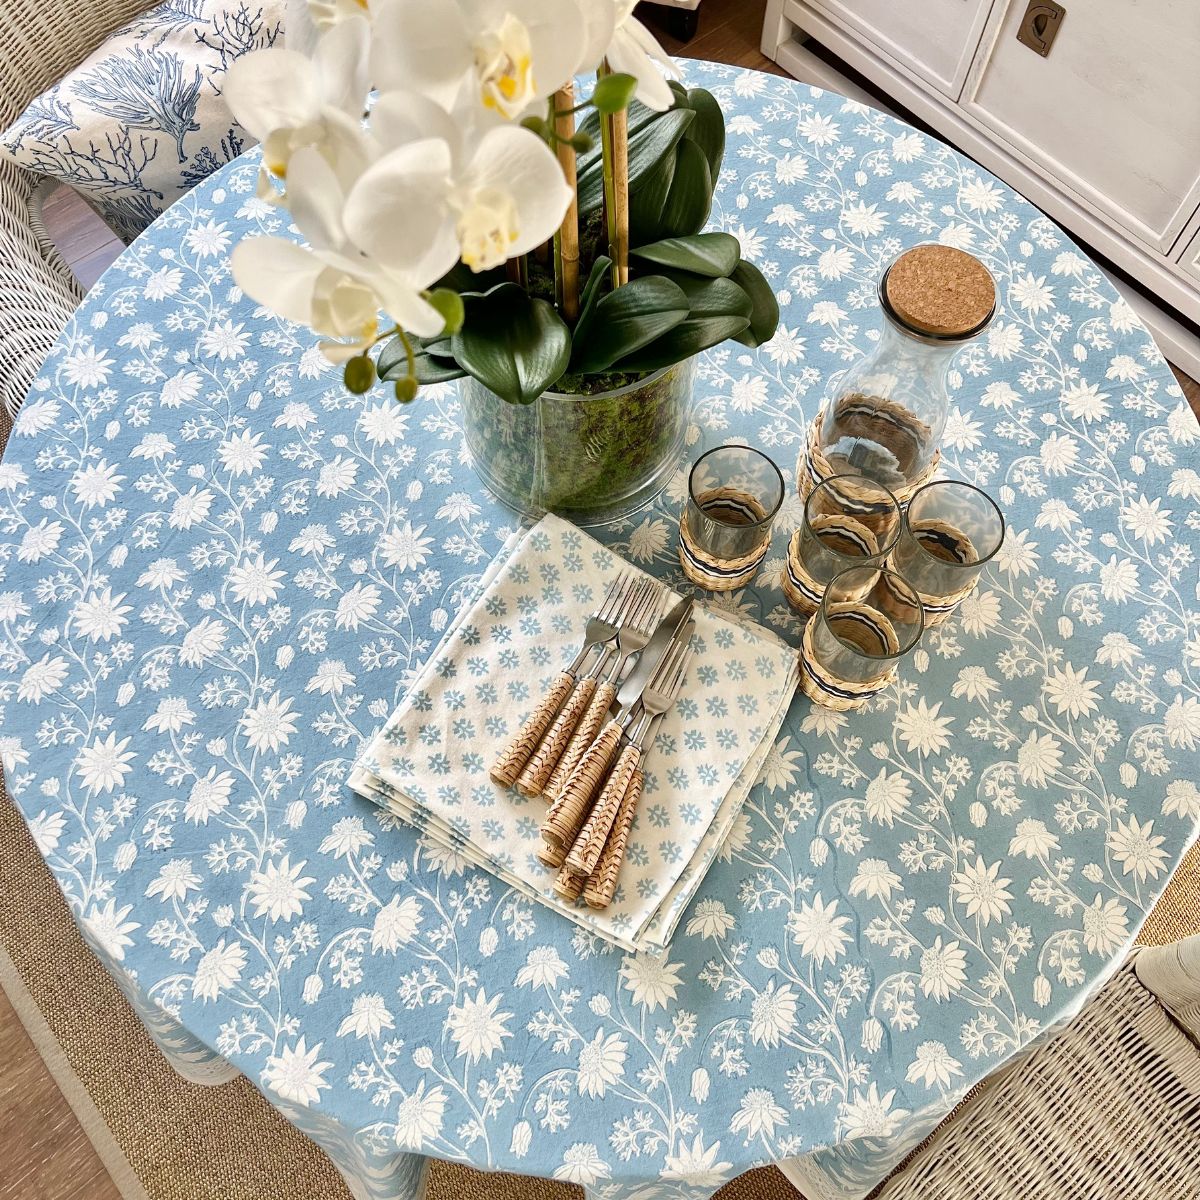 Sample Flannel flower sky blue round tablecloth  172 cm ©